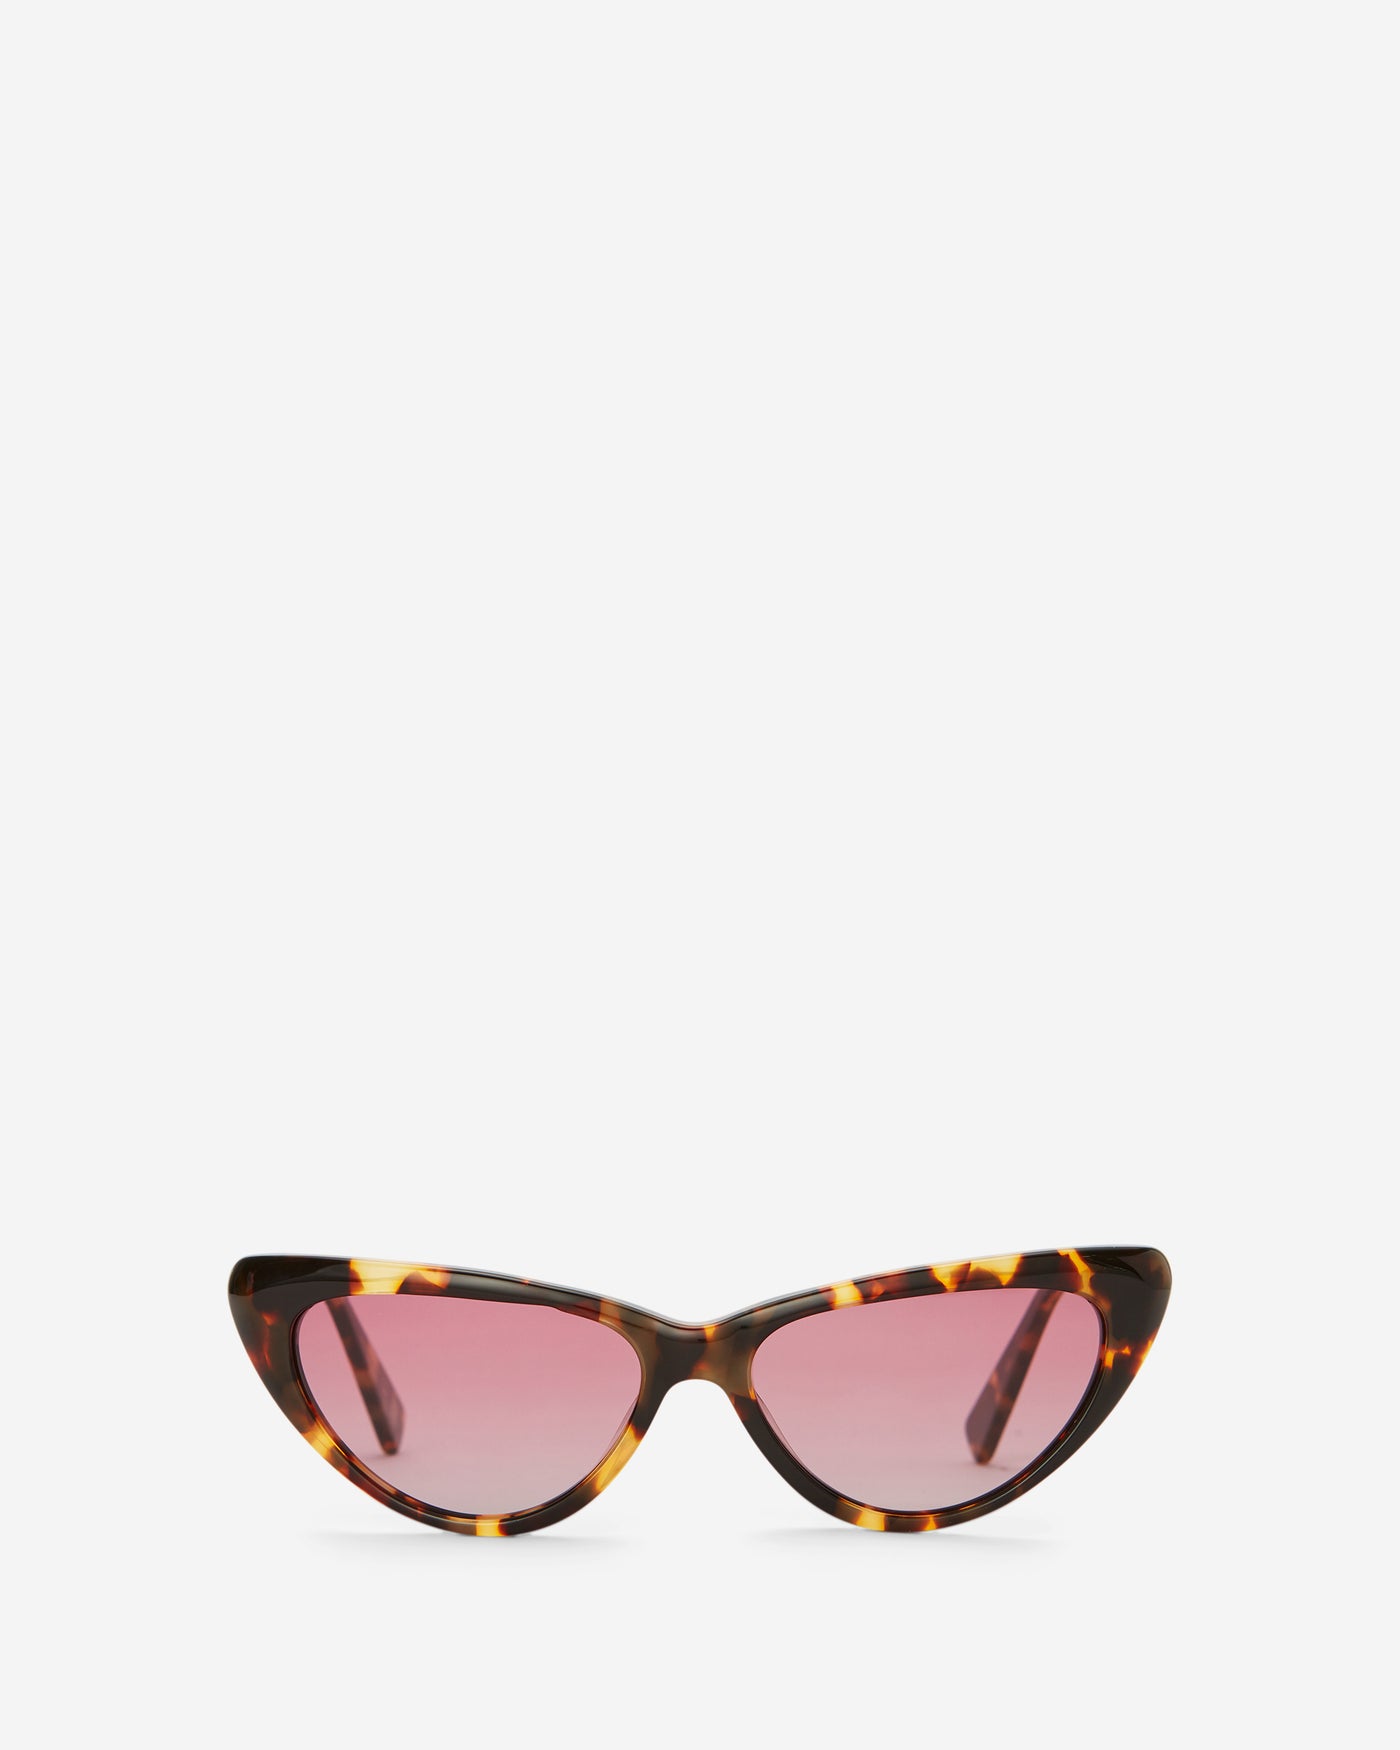 Retro Mini Cat Eye Sunglasses - Tortoise Frame Sunglasses Joey James, The Label   